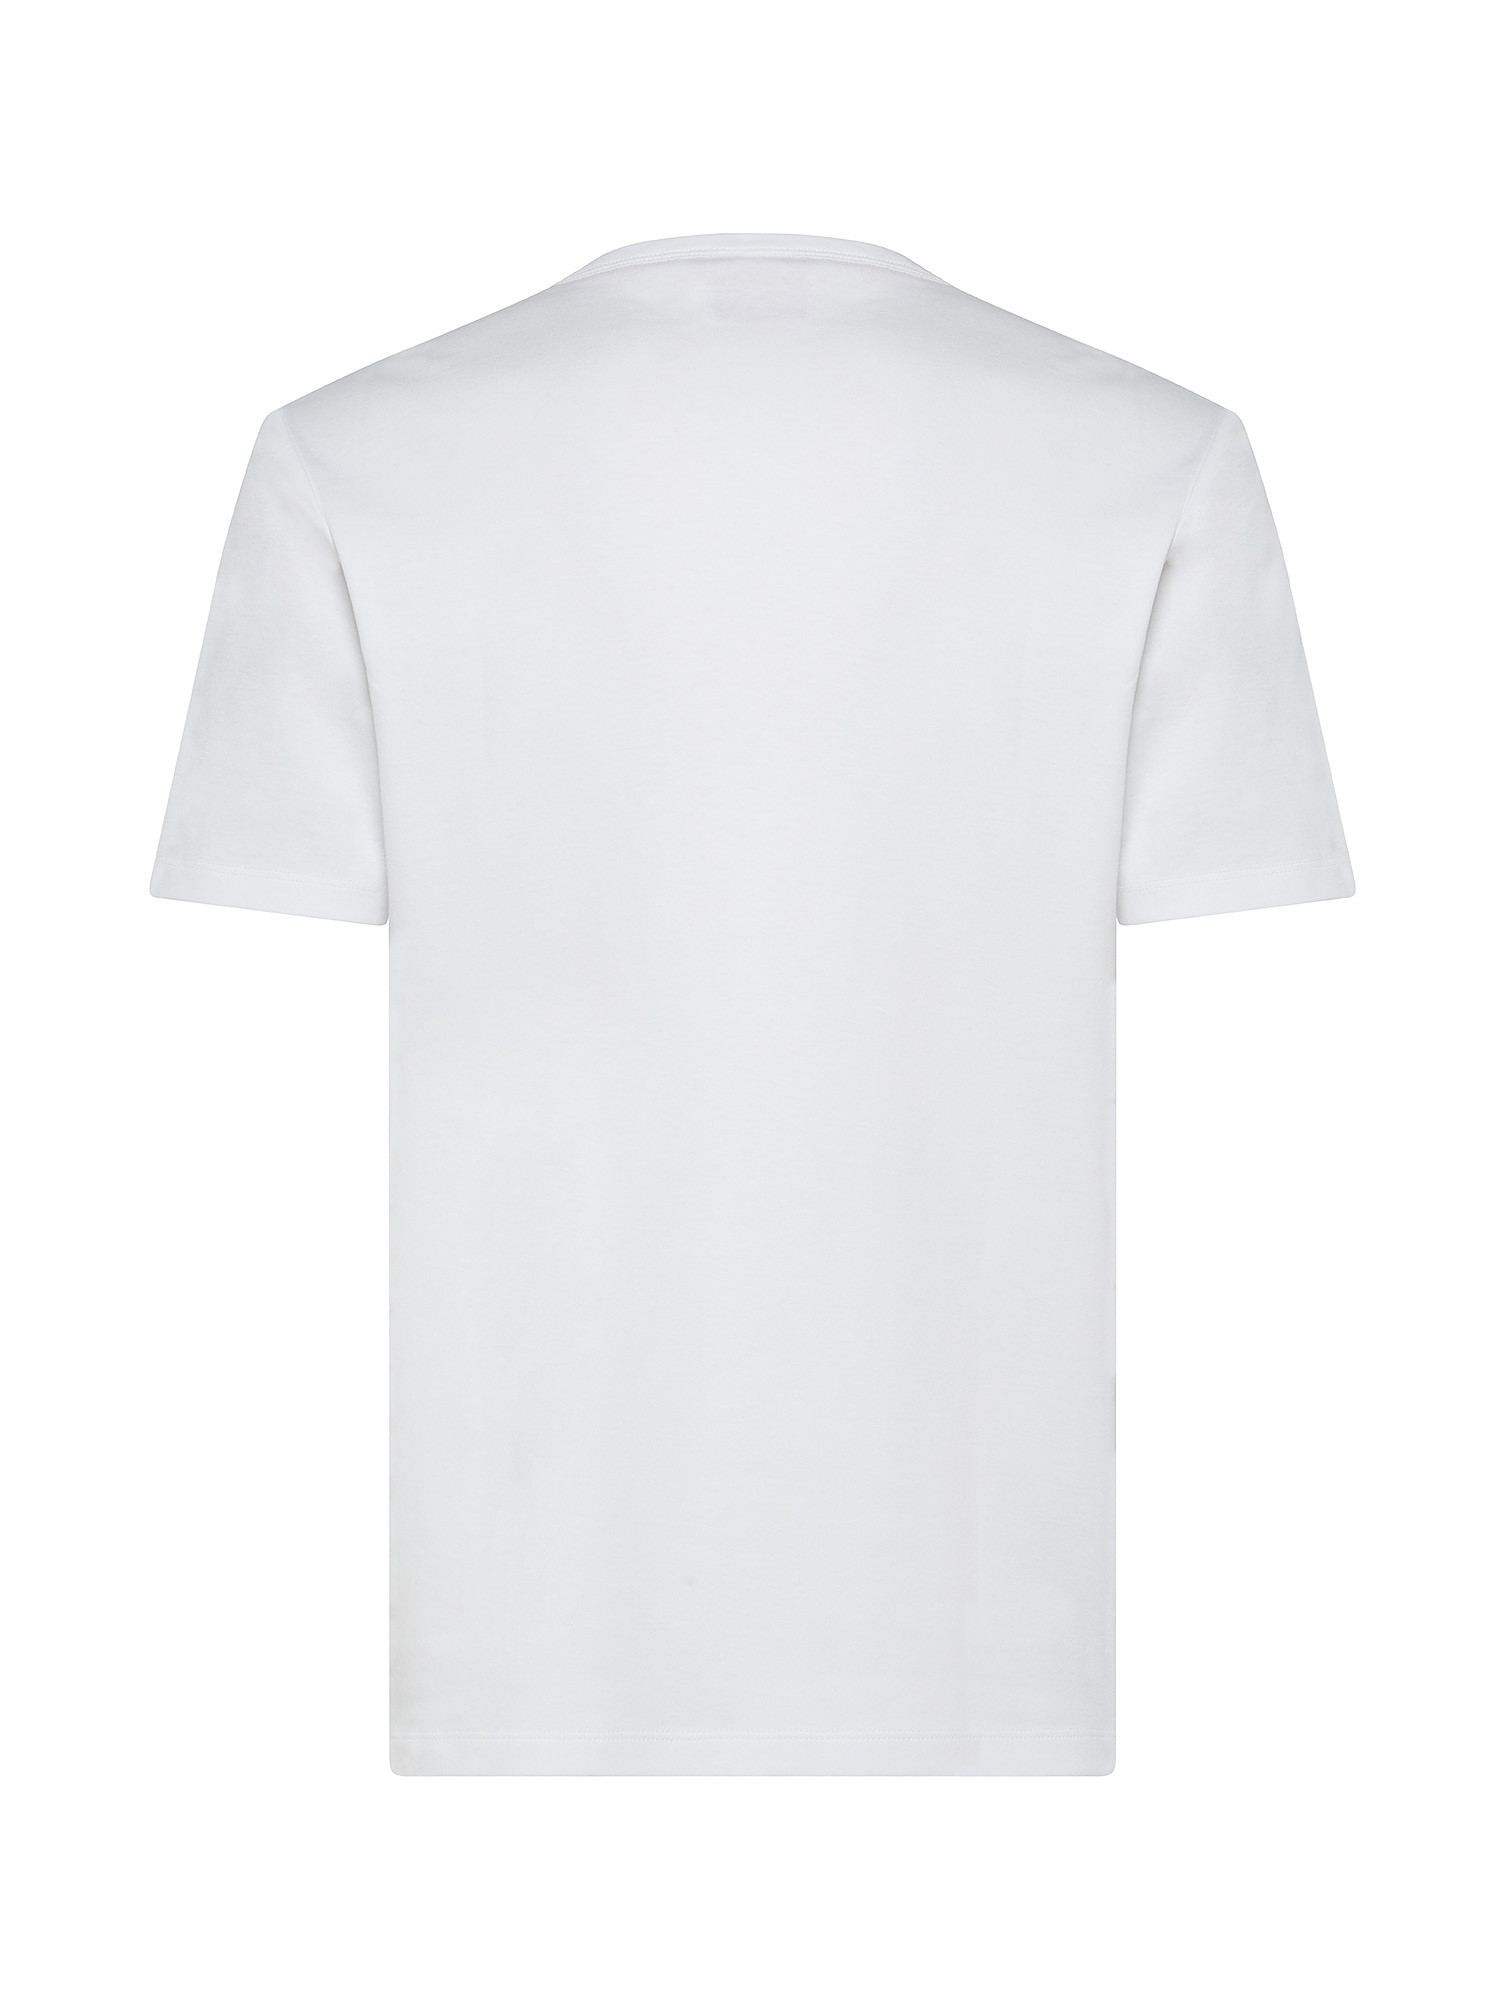 Hugo - T-shirt in cotone, Bianco, large image number 1